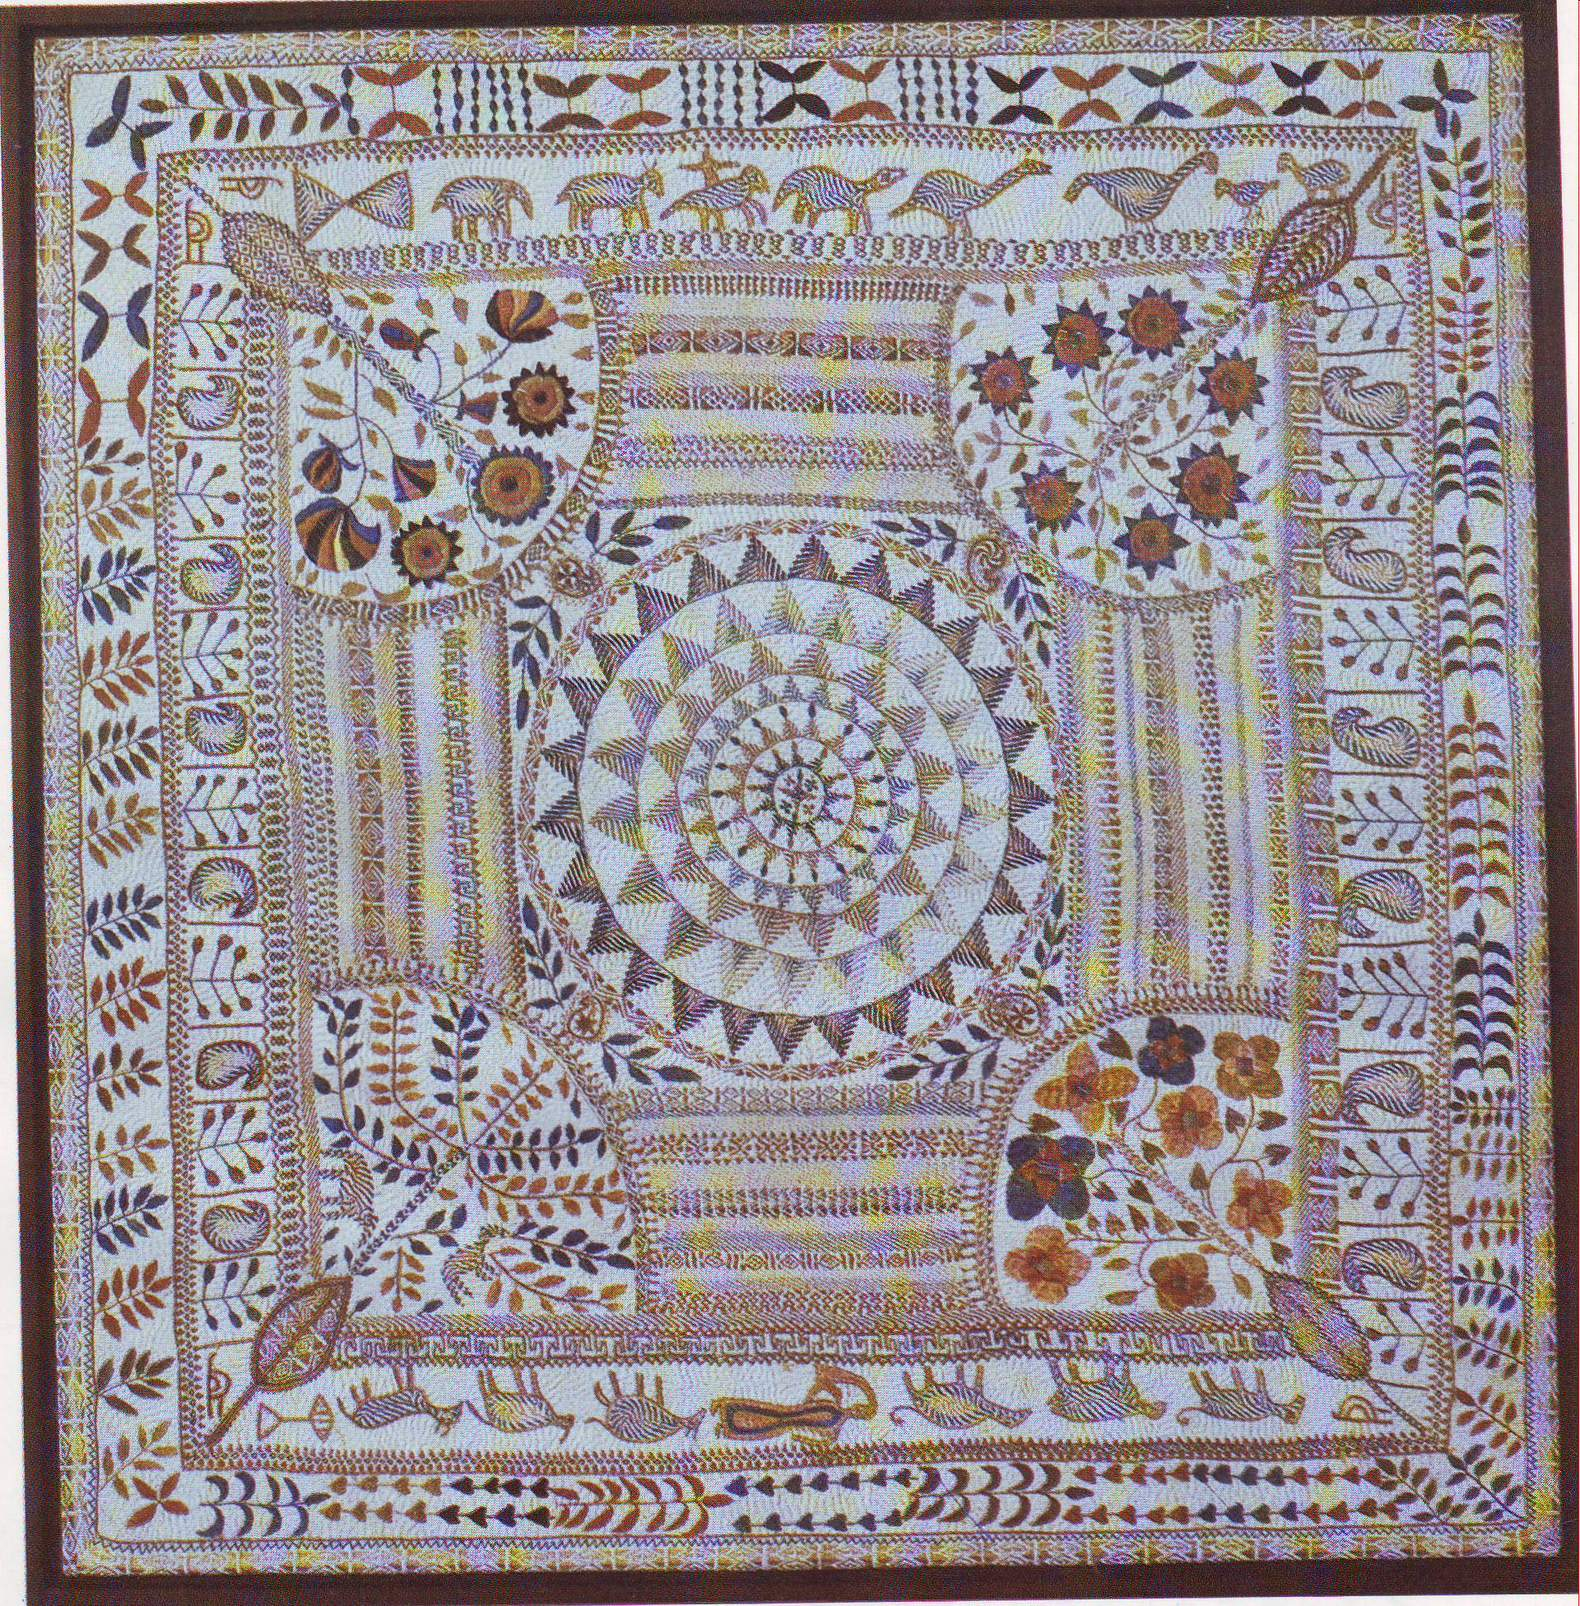 Indian Embroidery Designs Patterns Nakshi Kantha Wikipedia